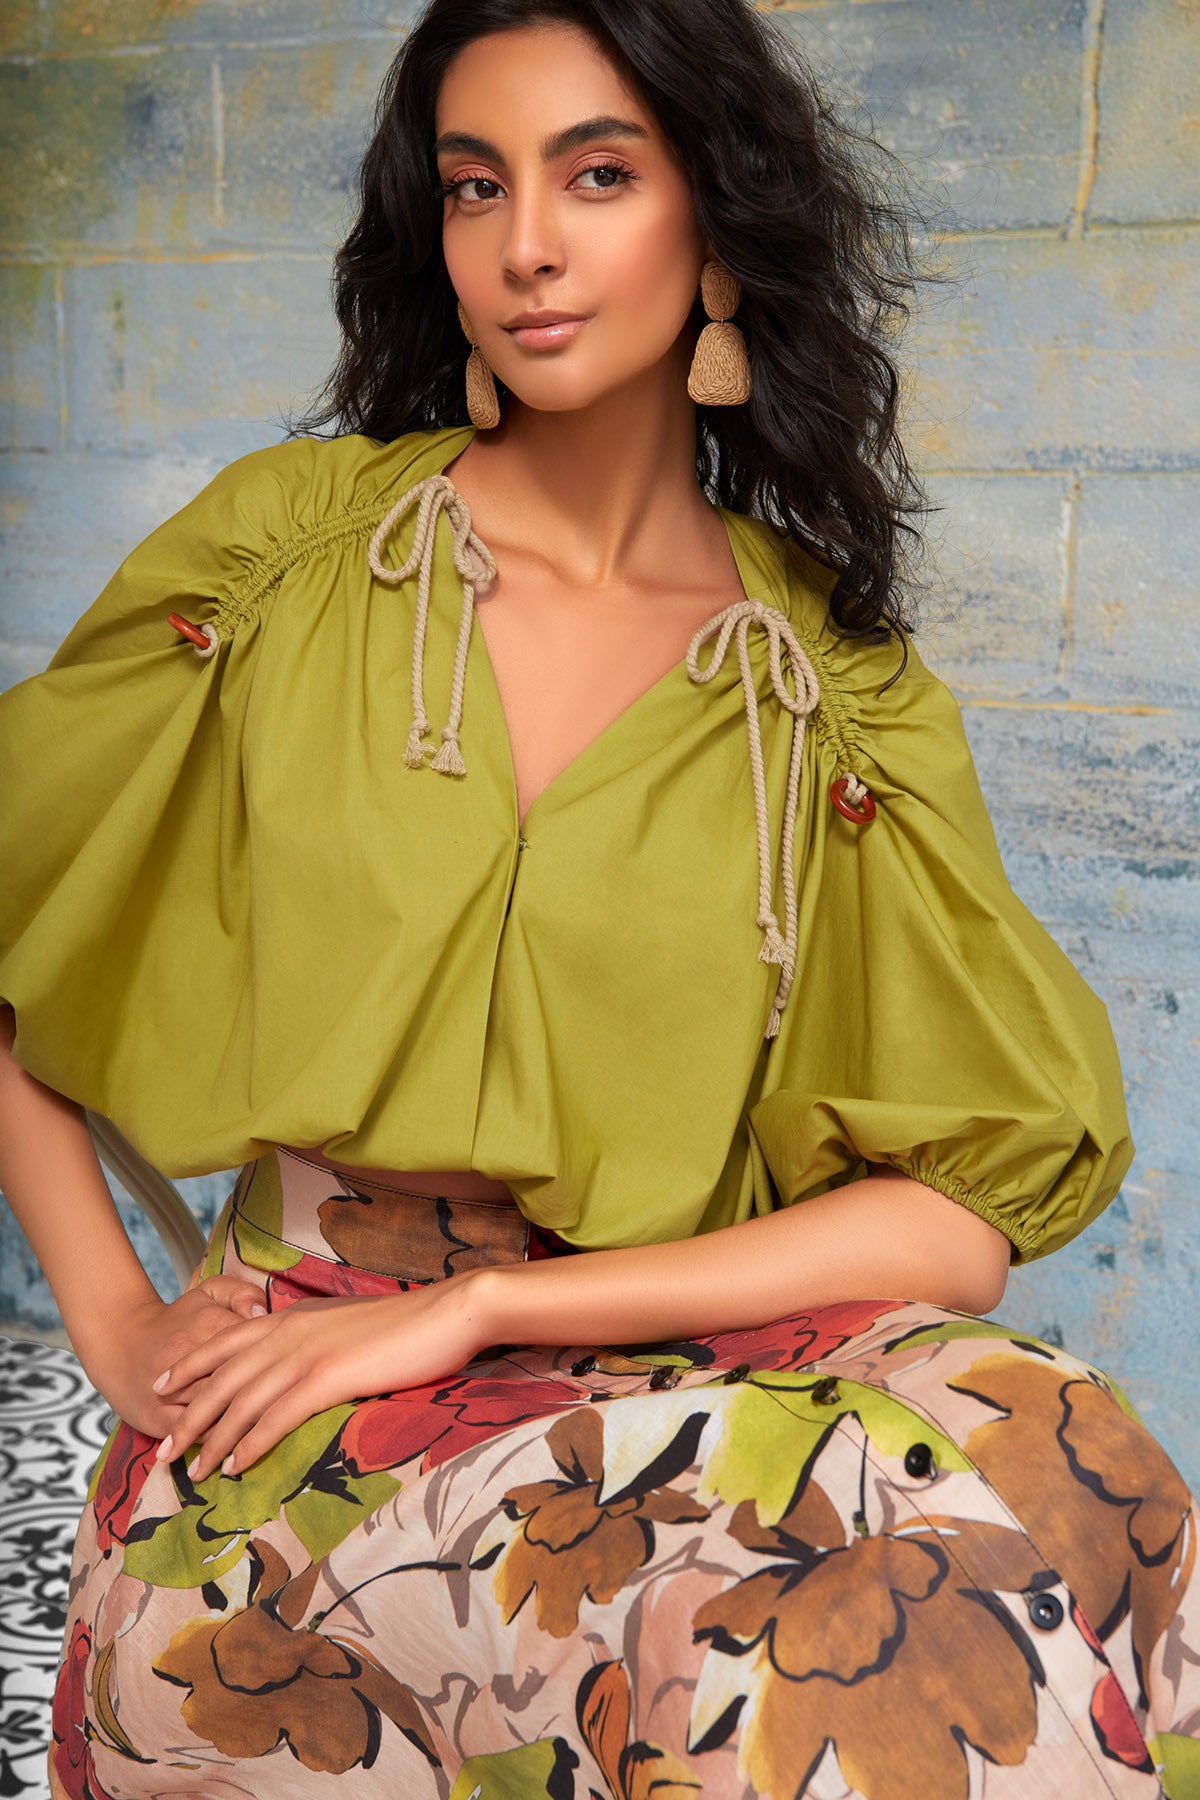 Kriado - Kriado Boutique New Arrivals Neon Yellow Lace Top Dress Miami &  Puerto Rico, Shop the look online